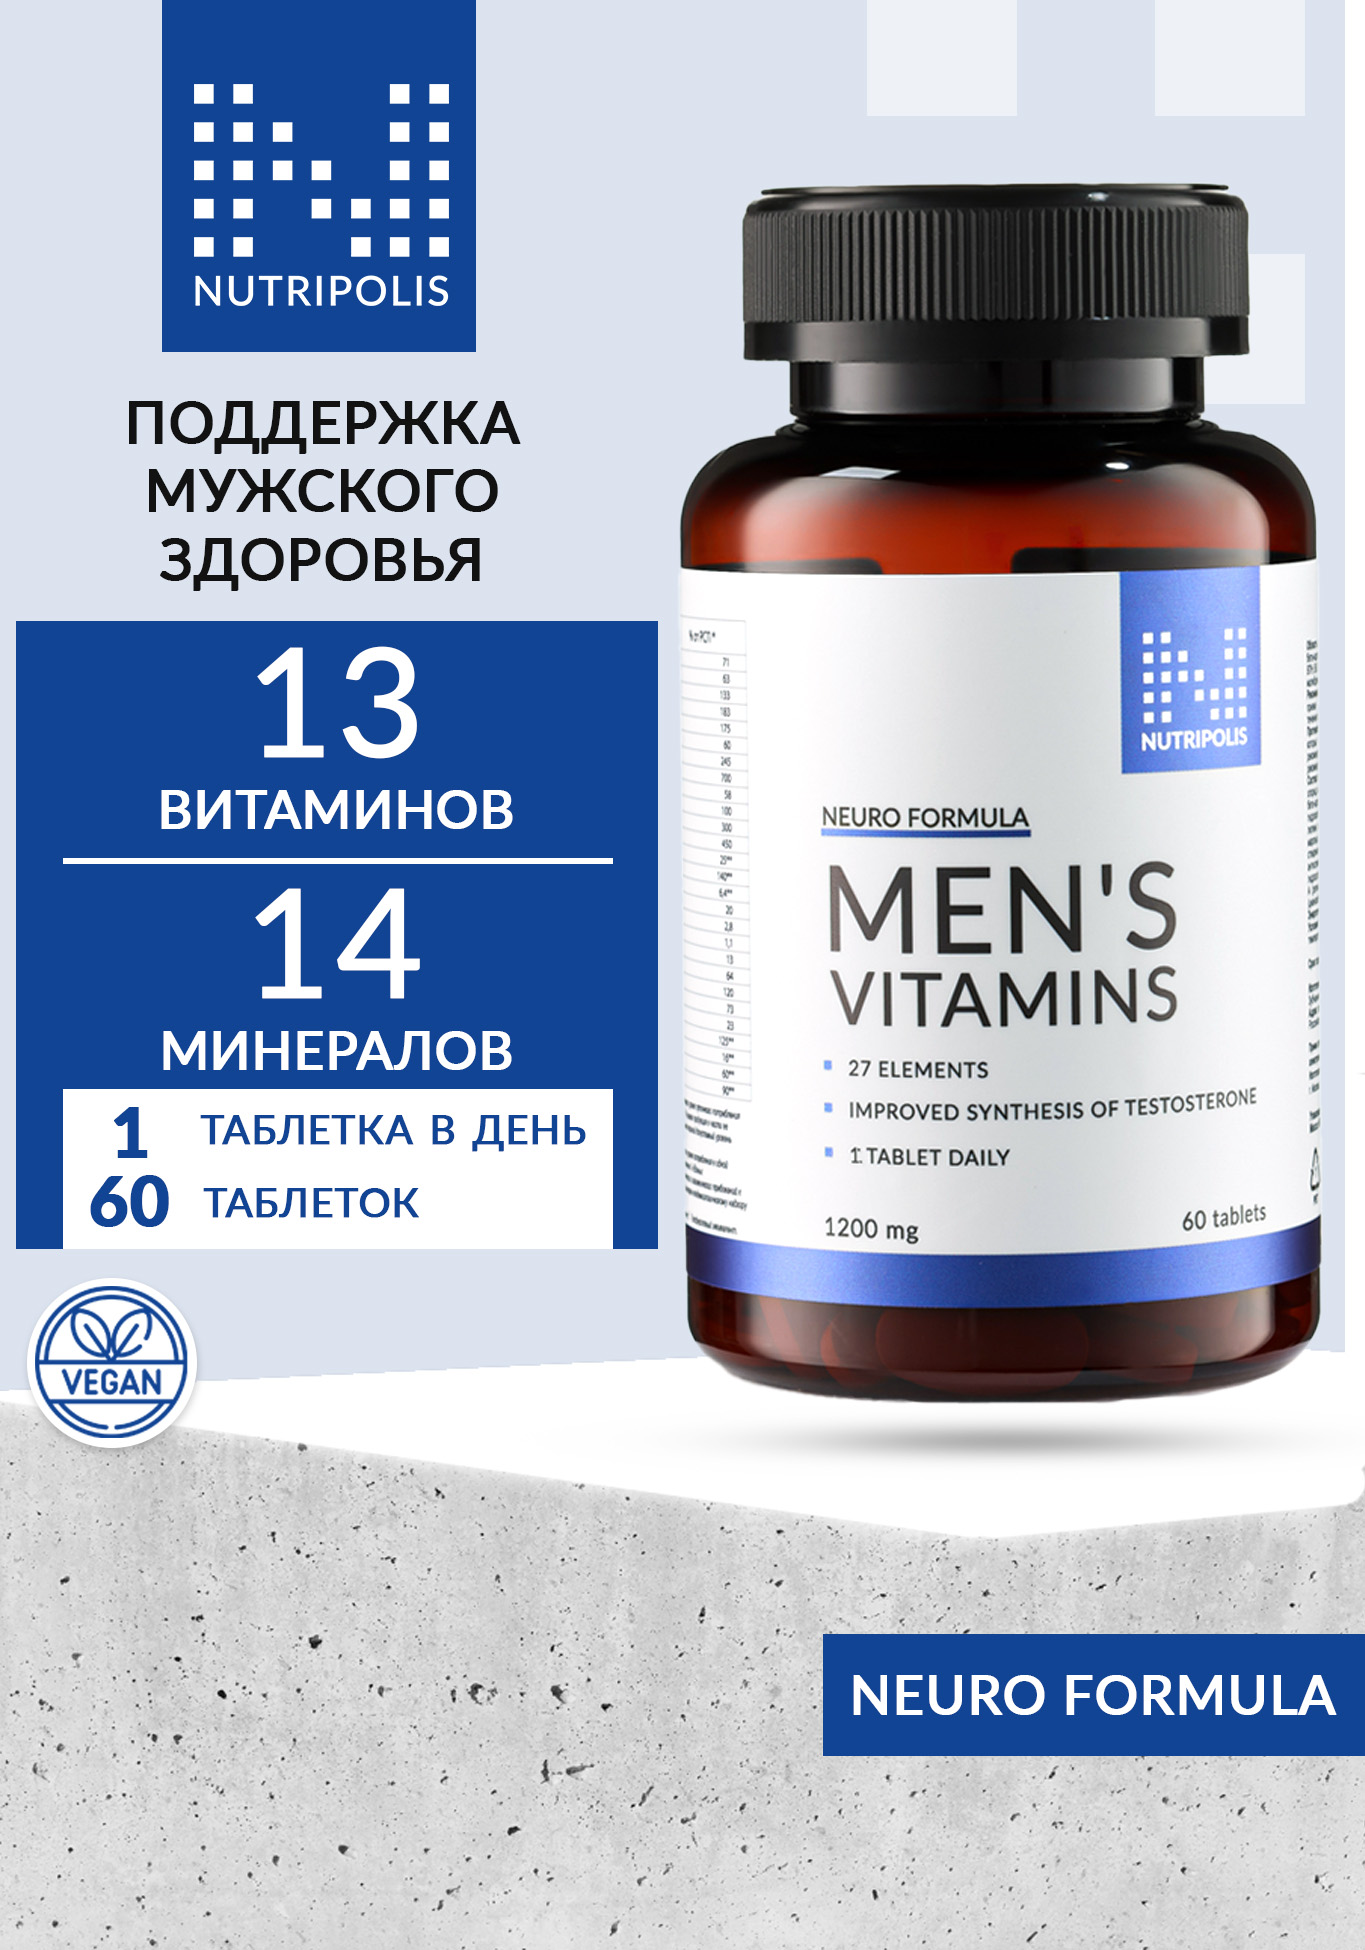 Men vitamin`s (Витамины для мужчин) NUTRIPOLIS